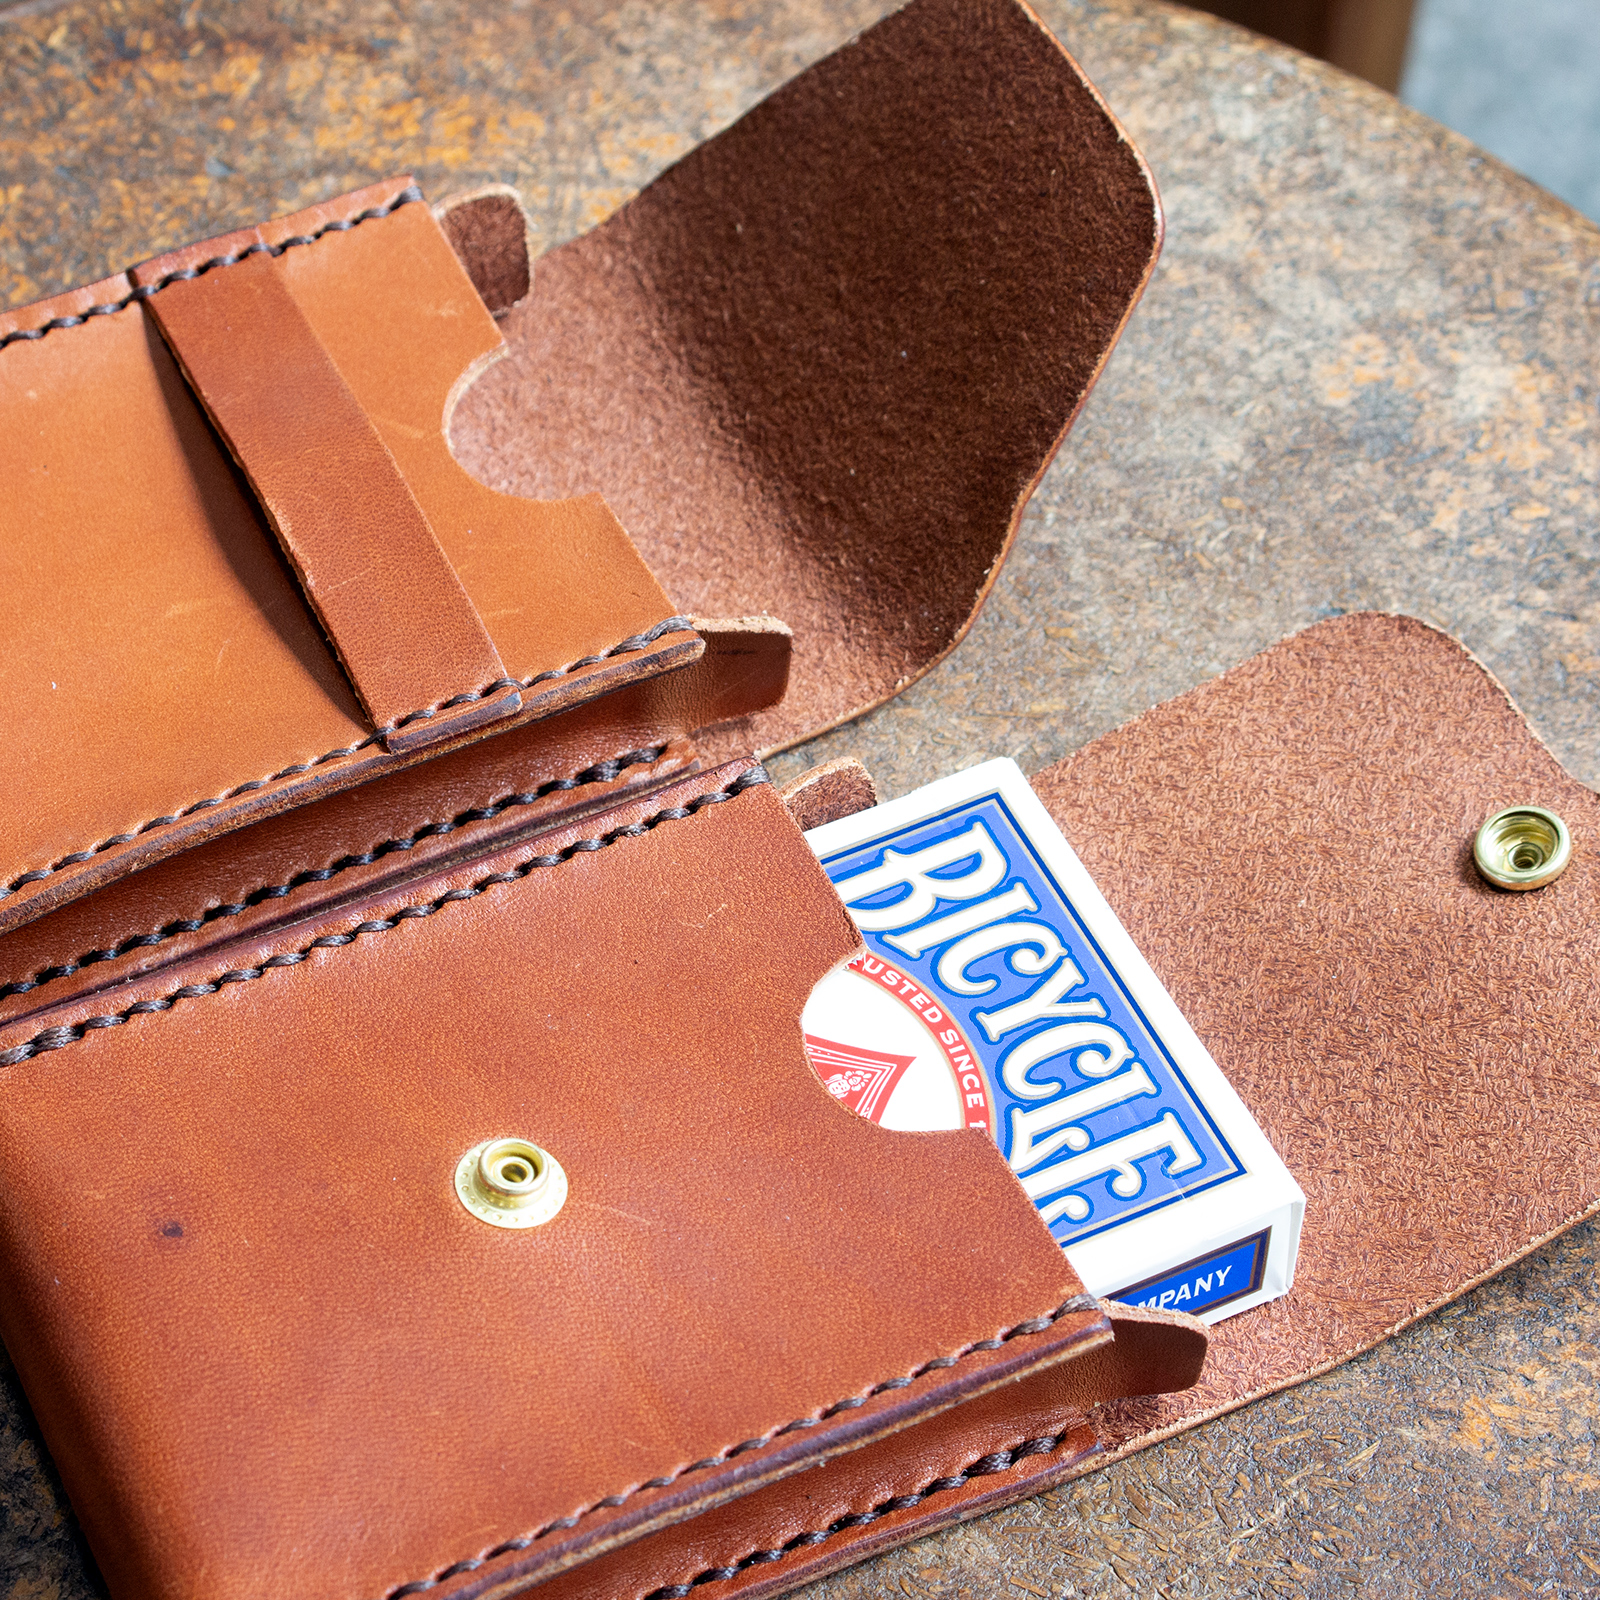 Hippo Leather Card Holder Kit DIY Leather Card Wallet Kit DIY Leather  Projects DIY Leather Kit